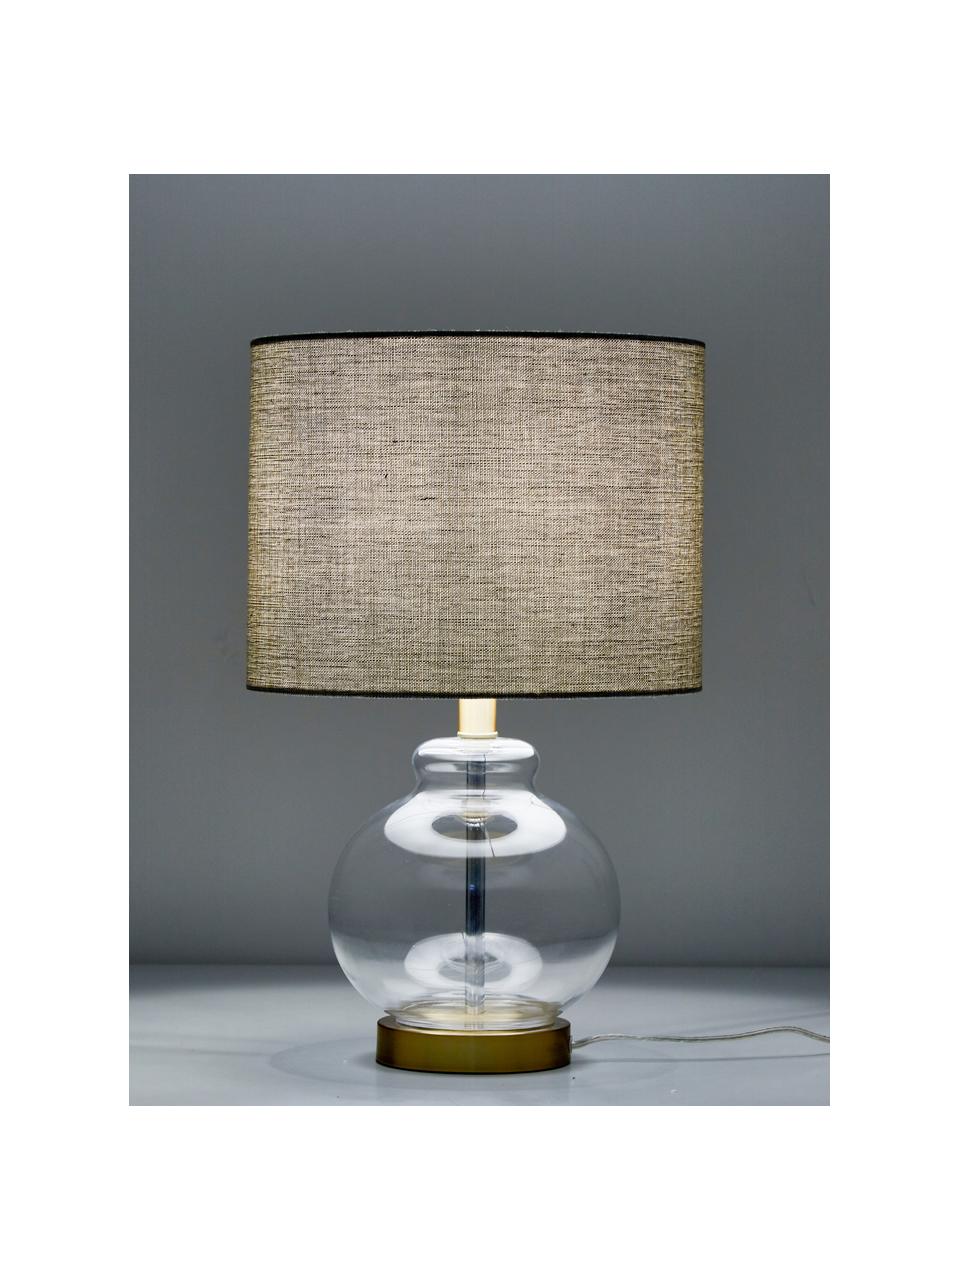 Tischlampe Natty mit Glasfuß, Lampenschirm: Textil, Lampenfuß: Glas, Sockel: Messing, gebürstet, Taupe, Transparent, Ø 31 x H 48 cm